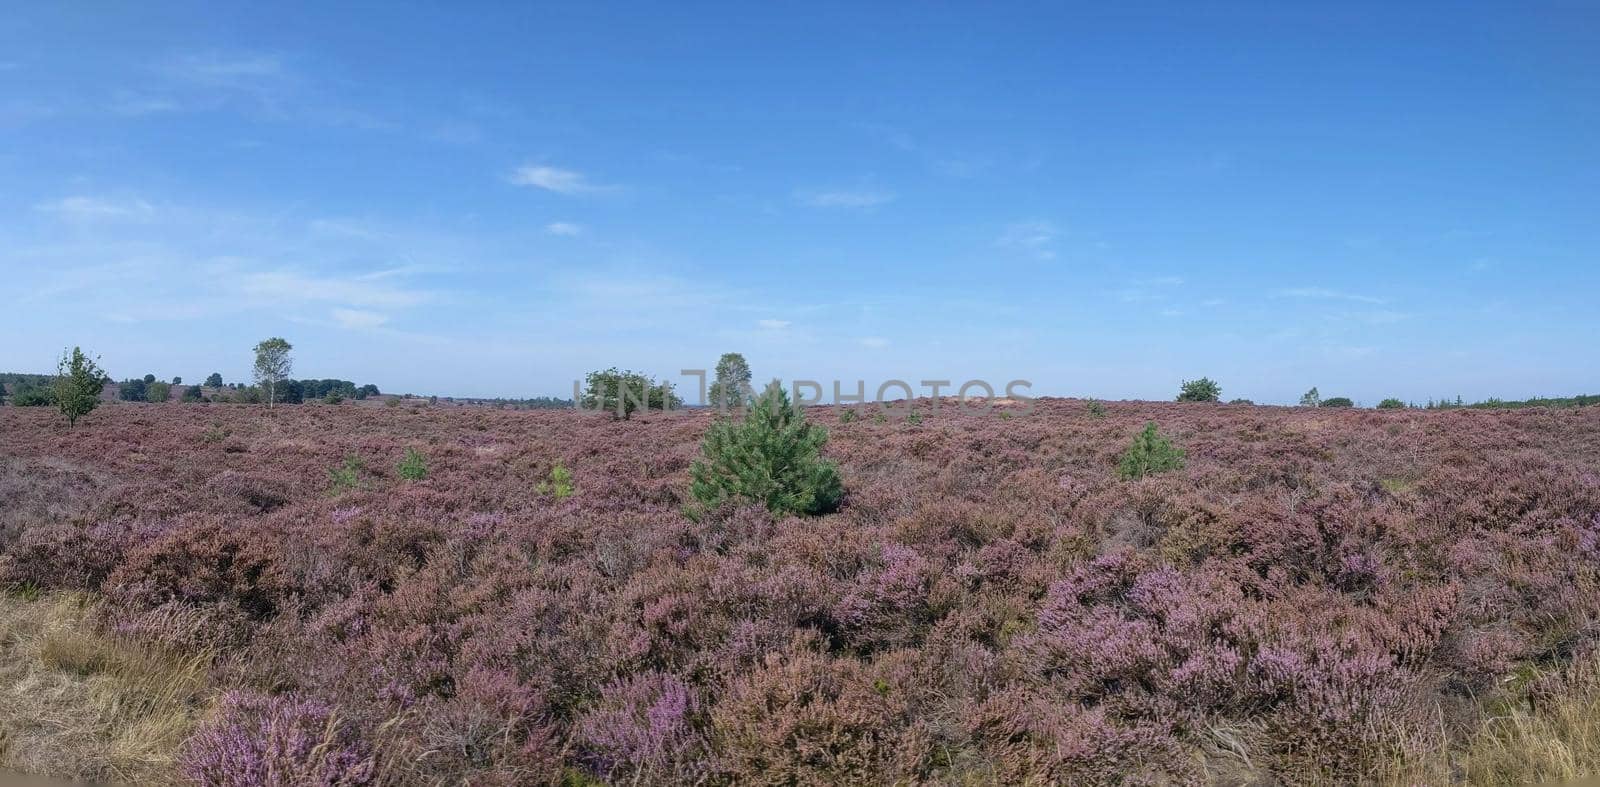 Panoramic Landscape at the National Park Sallandse Heuvelrug in The Netherlands